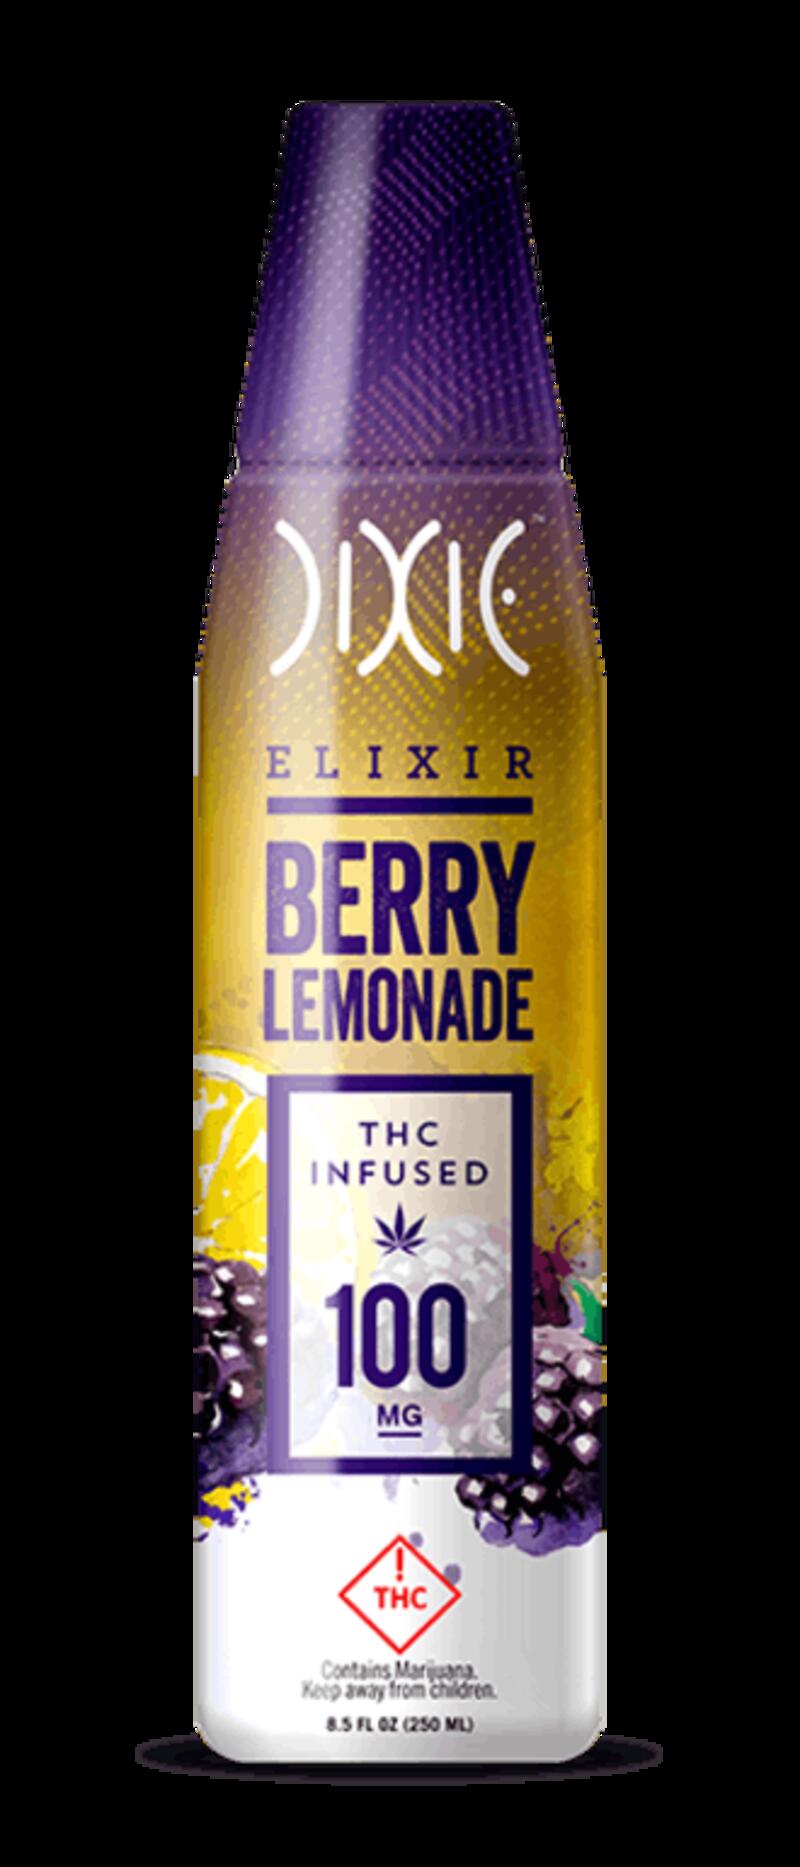 Dixie Elixir 100mg Berry Lemonade